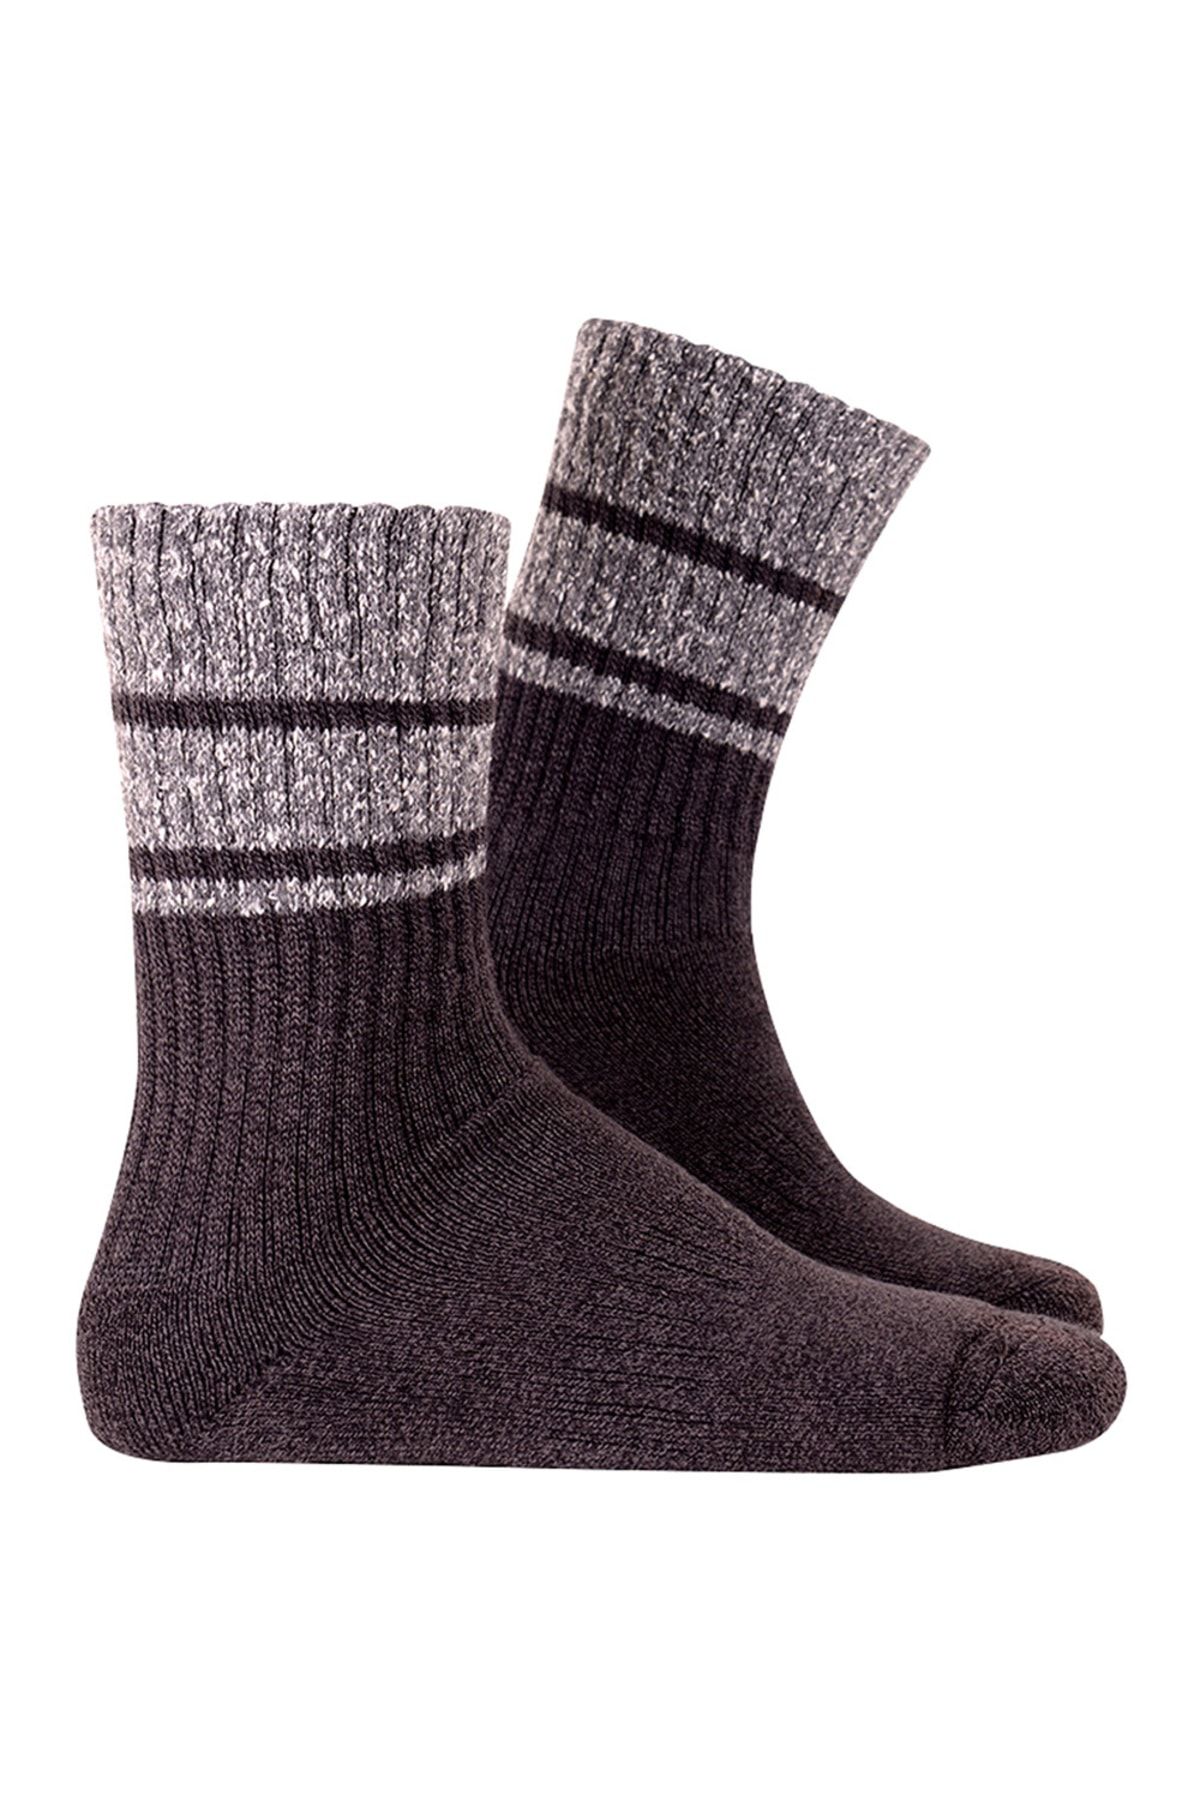 SAVAGE Hzts47 Tf Anti-blister Çorap Antrasit 43-46